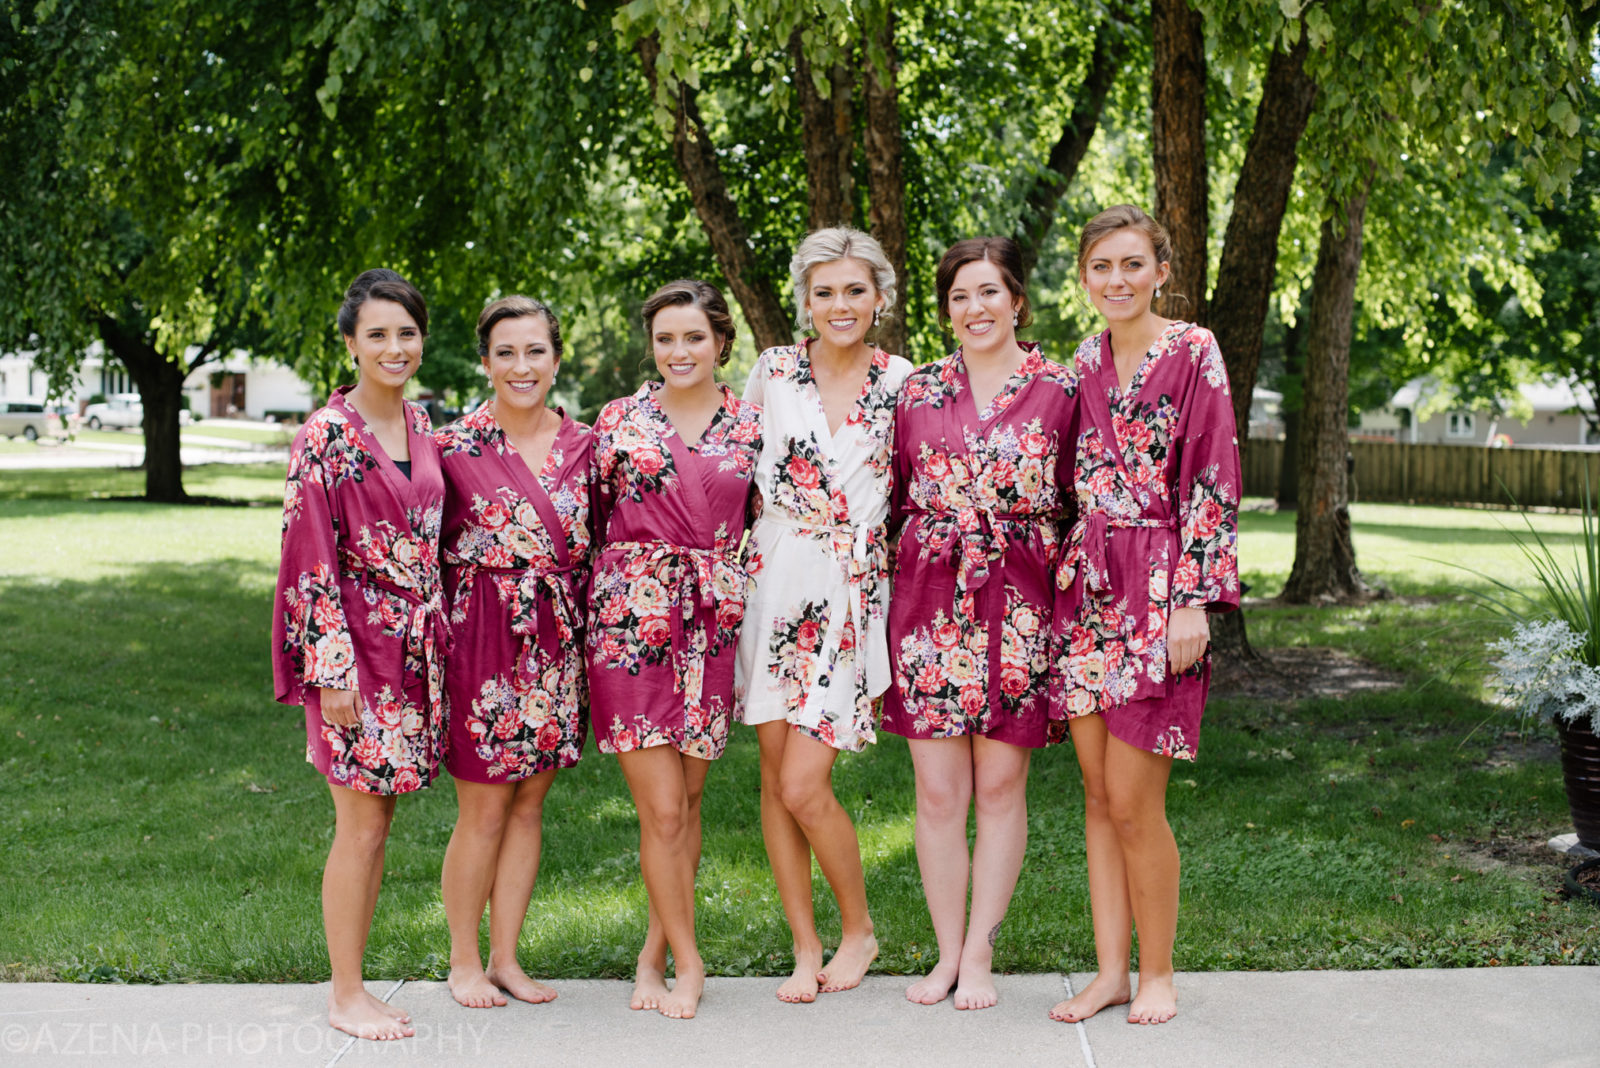 Bridesmaids wearing matching floral robes